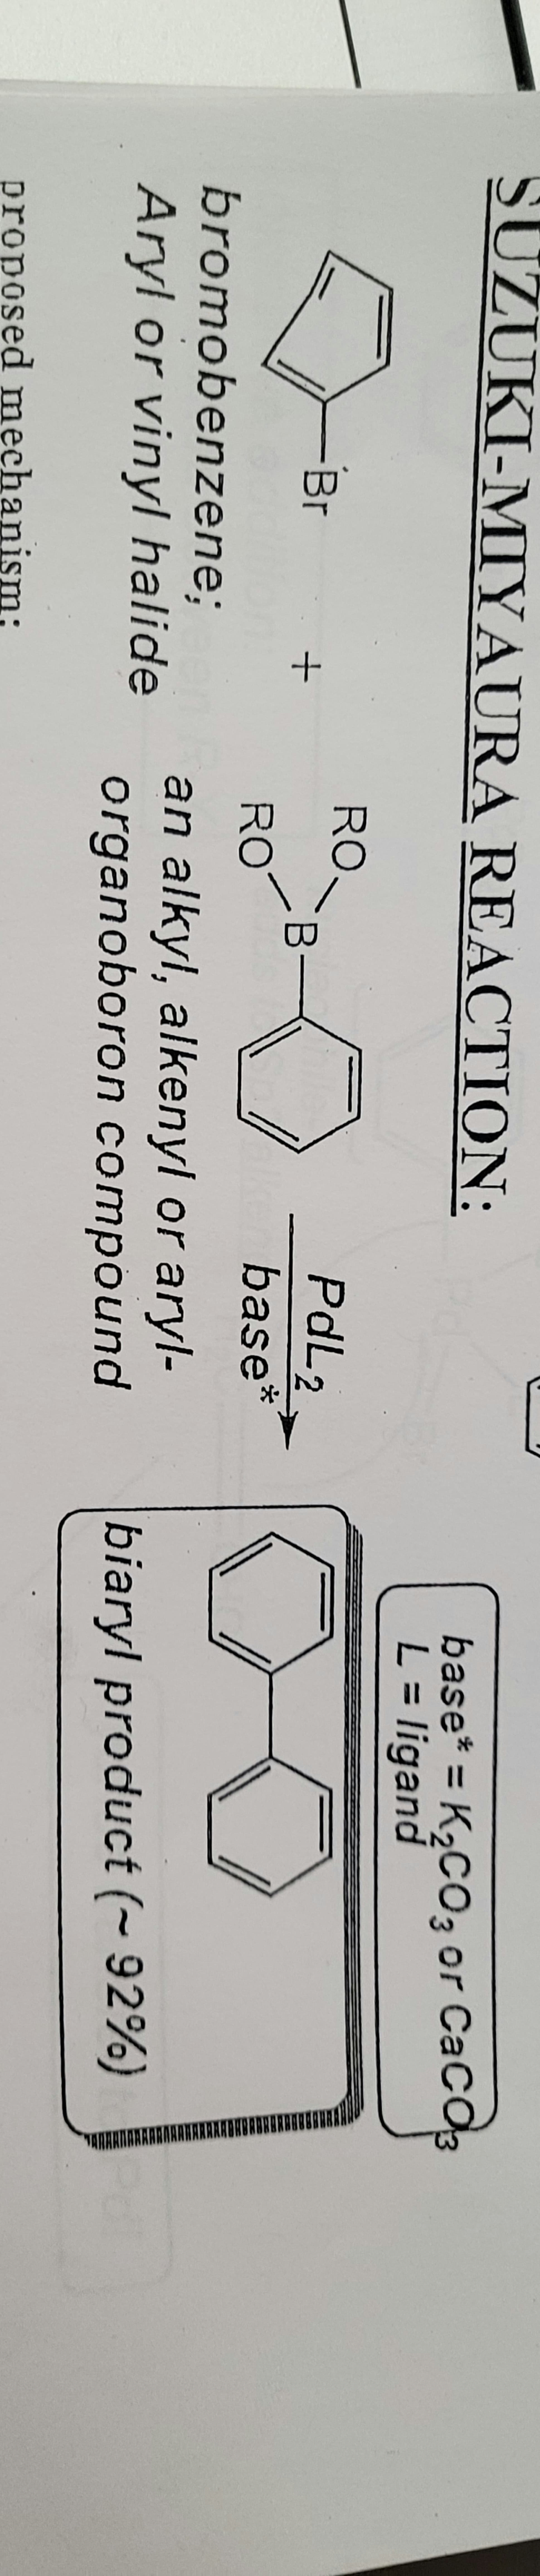 SUZUKI-MIYAURA REACTION:
Br
+
bromobenzene;
Aryl or vinyl halide
proposed mechanism:
RO.
RO
an alkyl, alkenyl or aryl-
organoboron compound
B-
PdL 2
base*
*
base* = K₂CO3 or CaCO3
=
biaryl product (~ 92%)